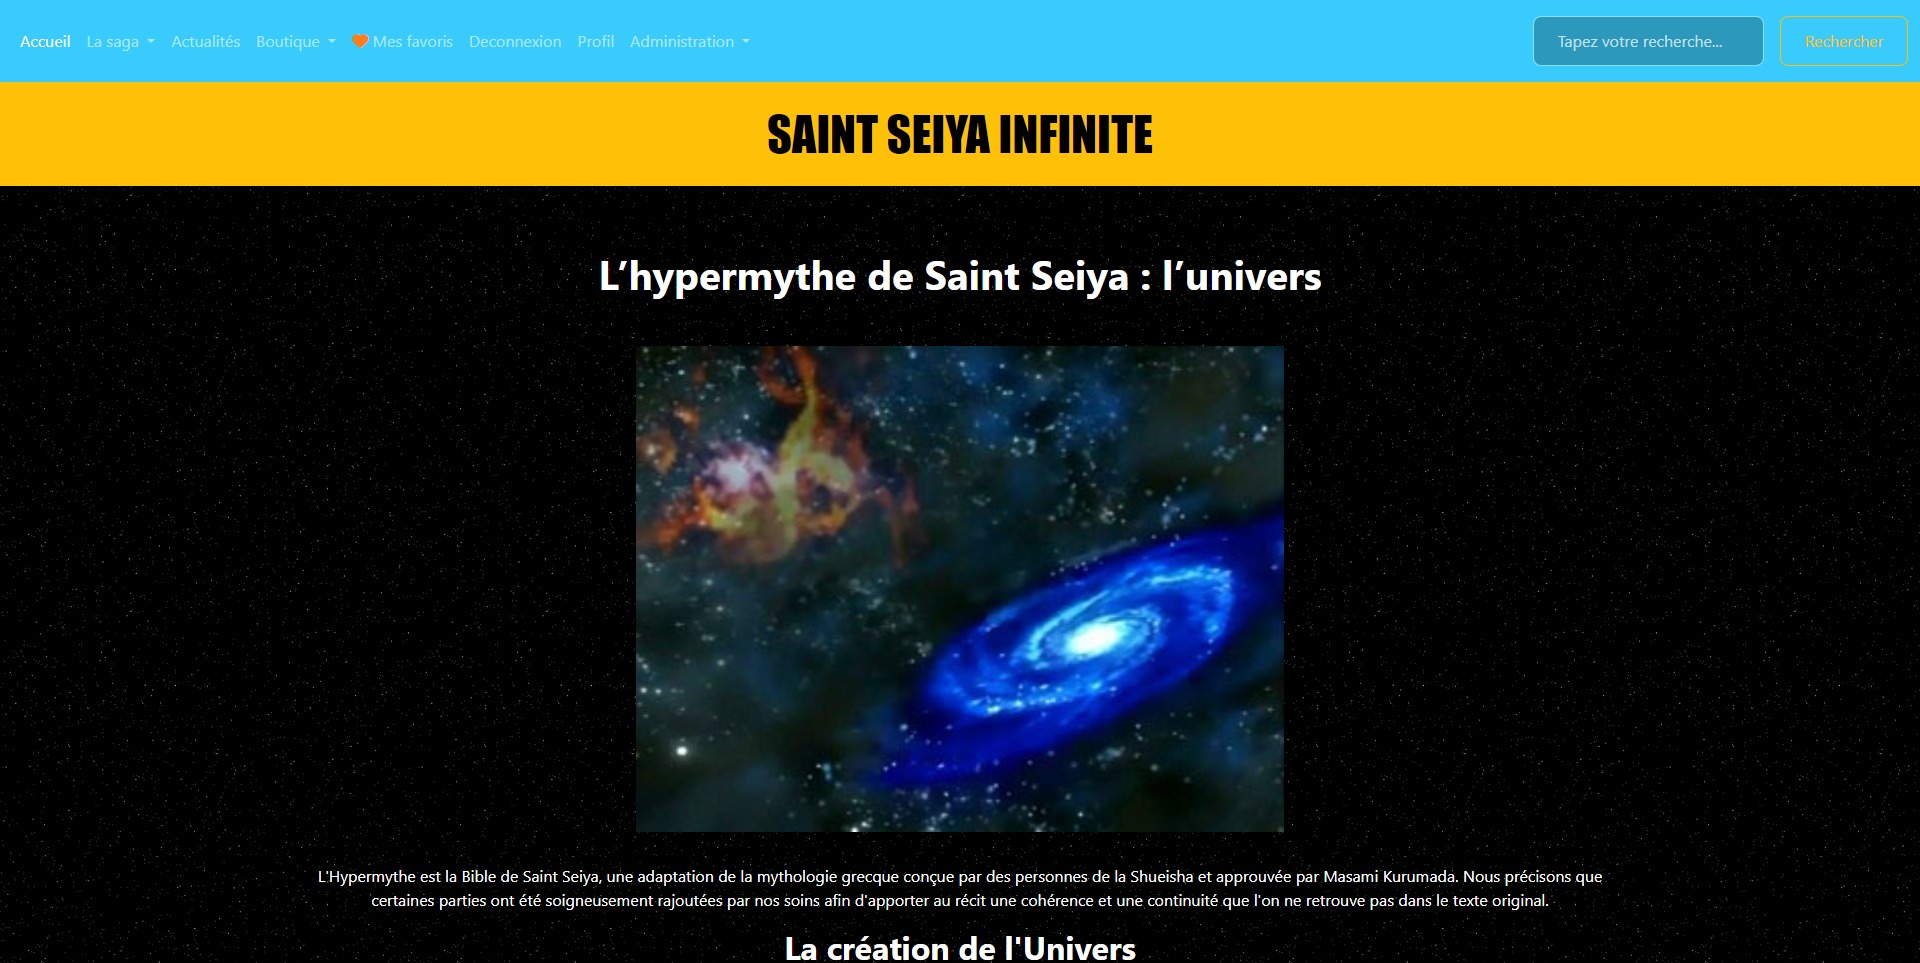 FireShot Capture 043 - L’hypermythe de Saint Seiya _ l’univers - 127.0.0.1